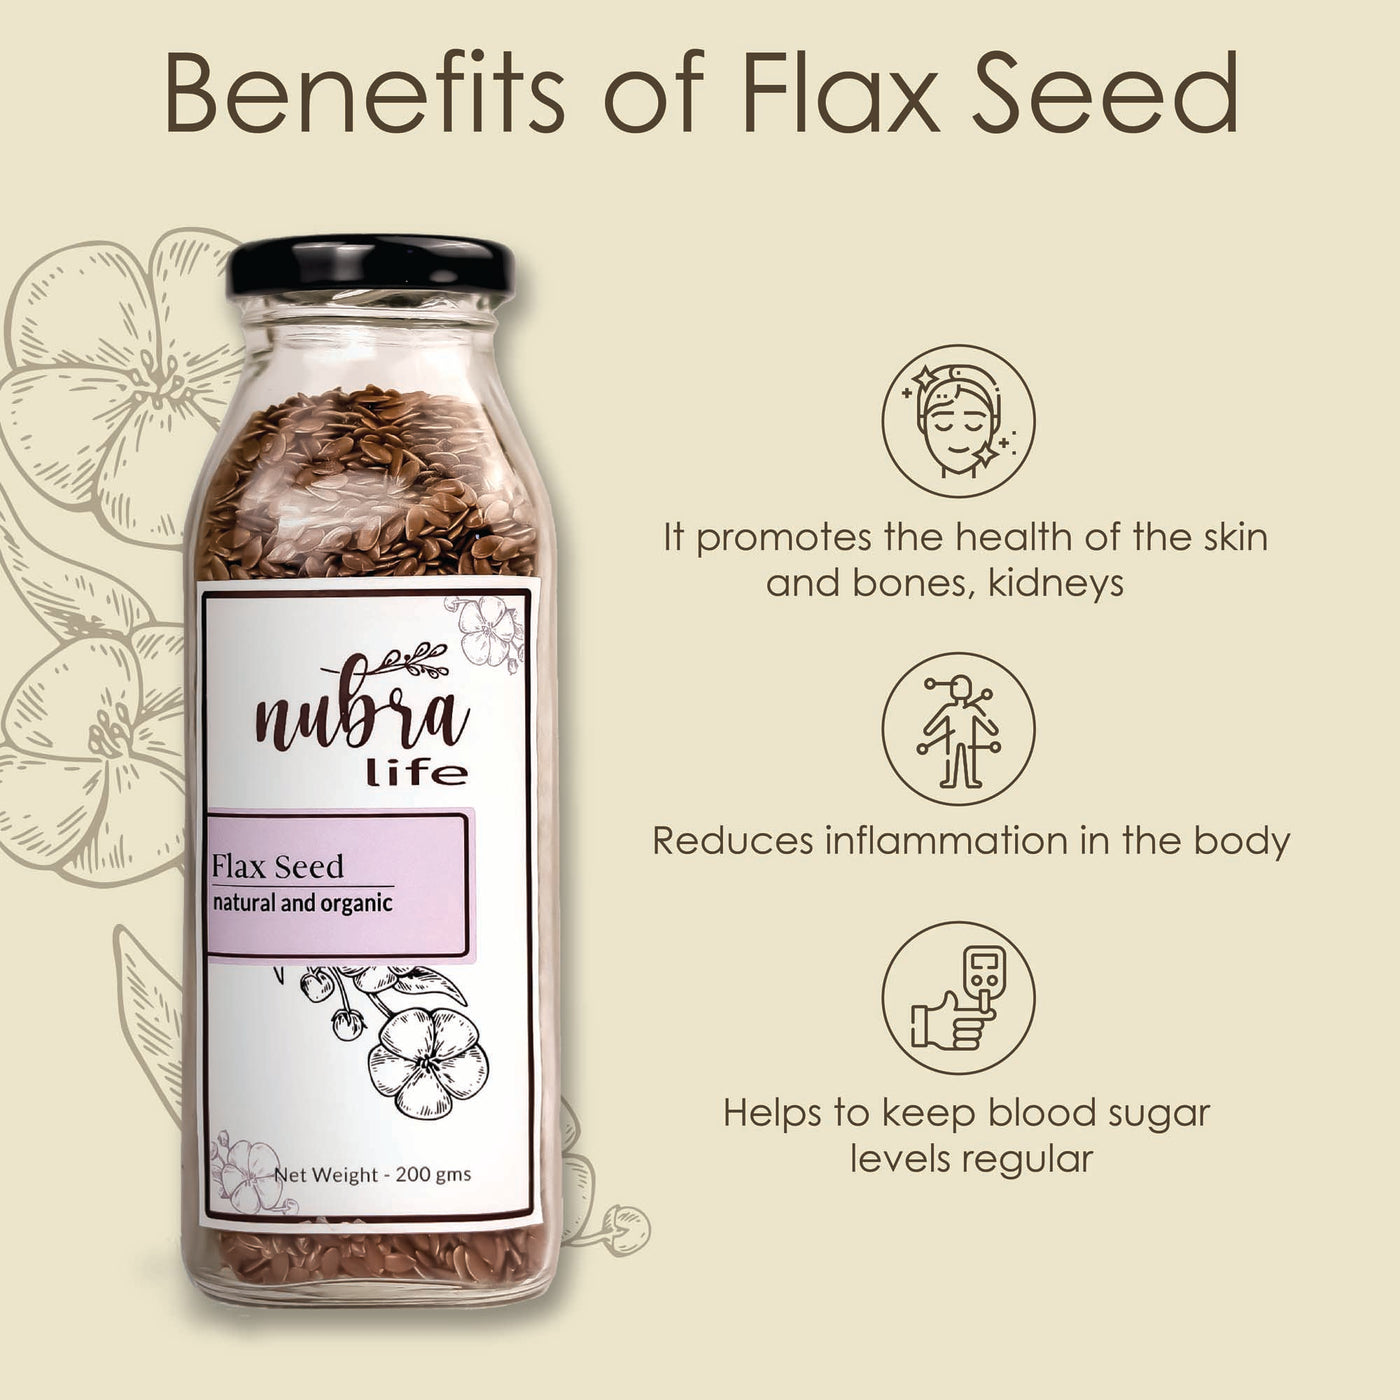  Flax Seeds